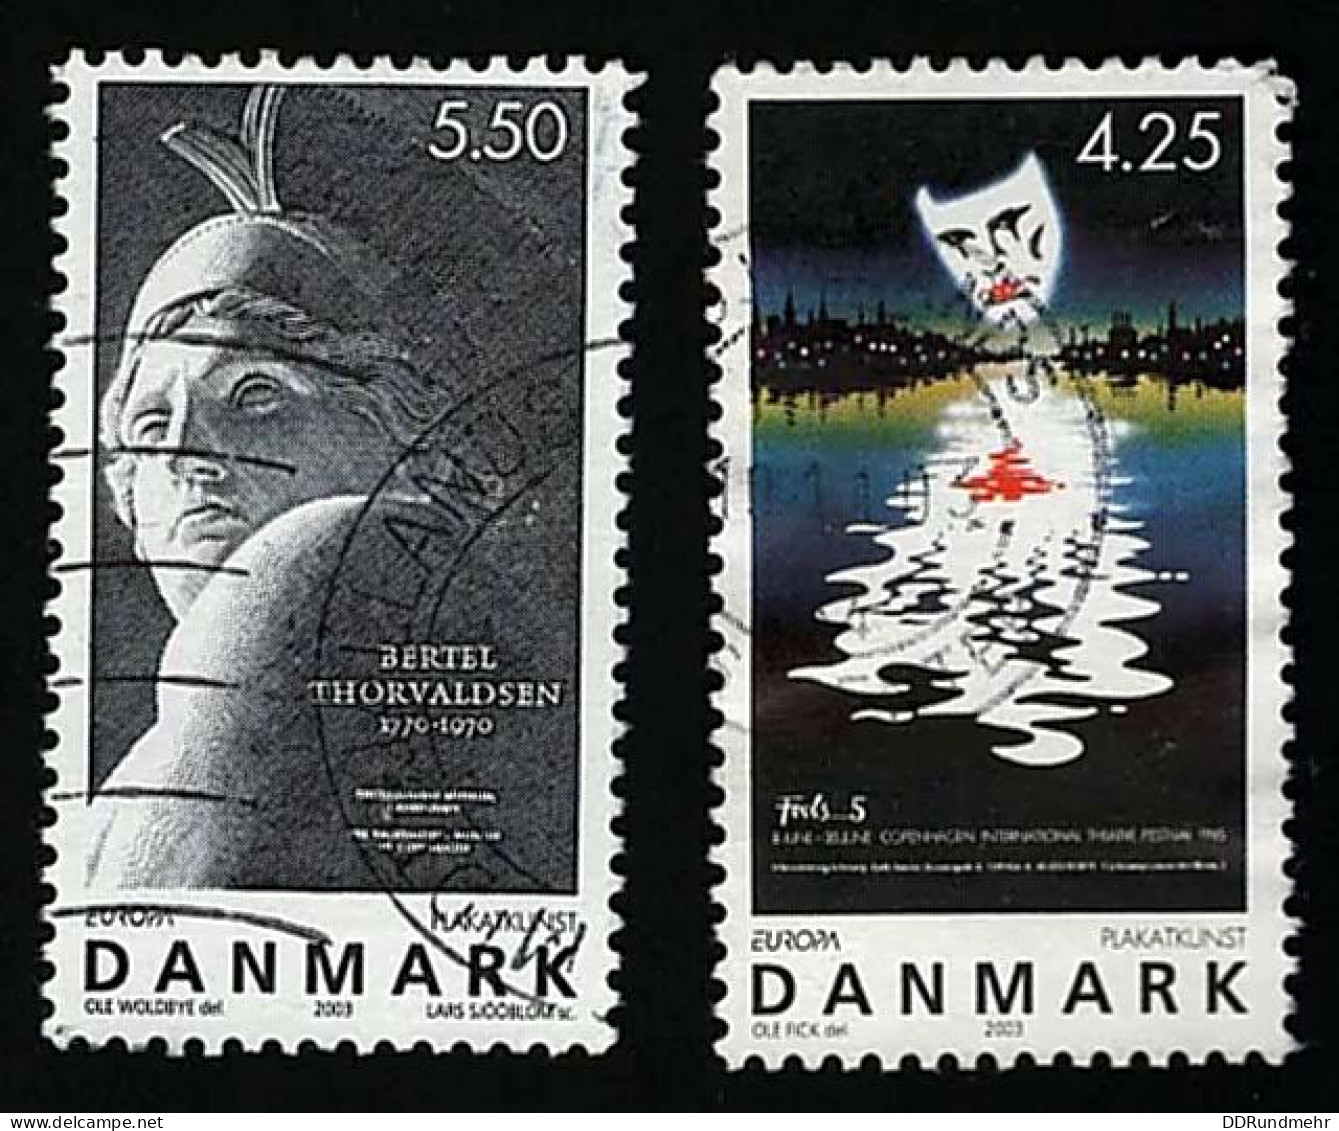 2003 Europa Michel DK 1341- 1342 Stamp Number DK 1250 - 1251 Yvert Et Tellier DK 1344 - 1345 Used - Oblitérés